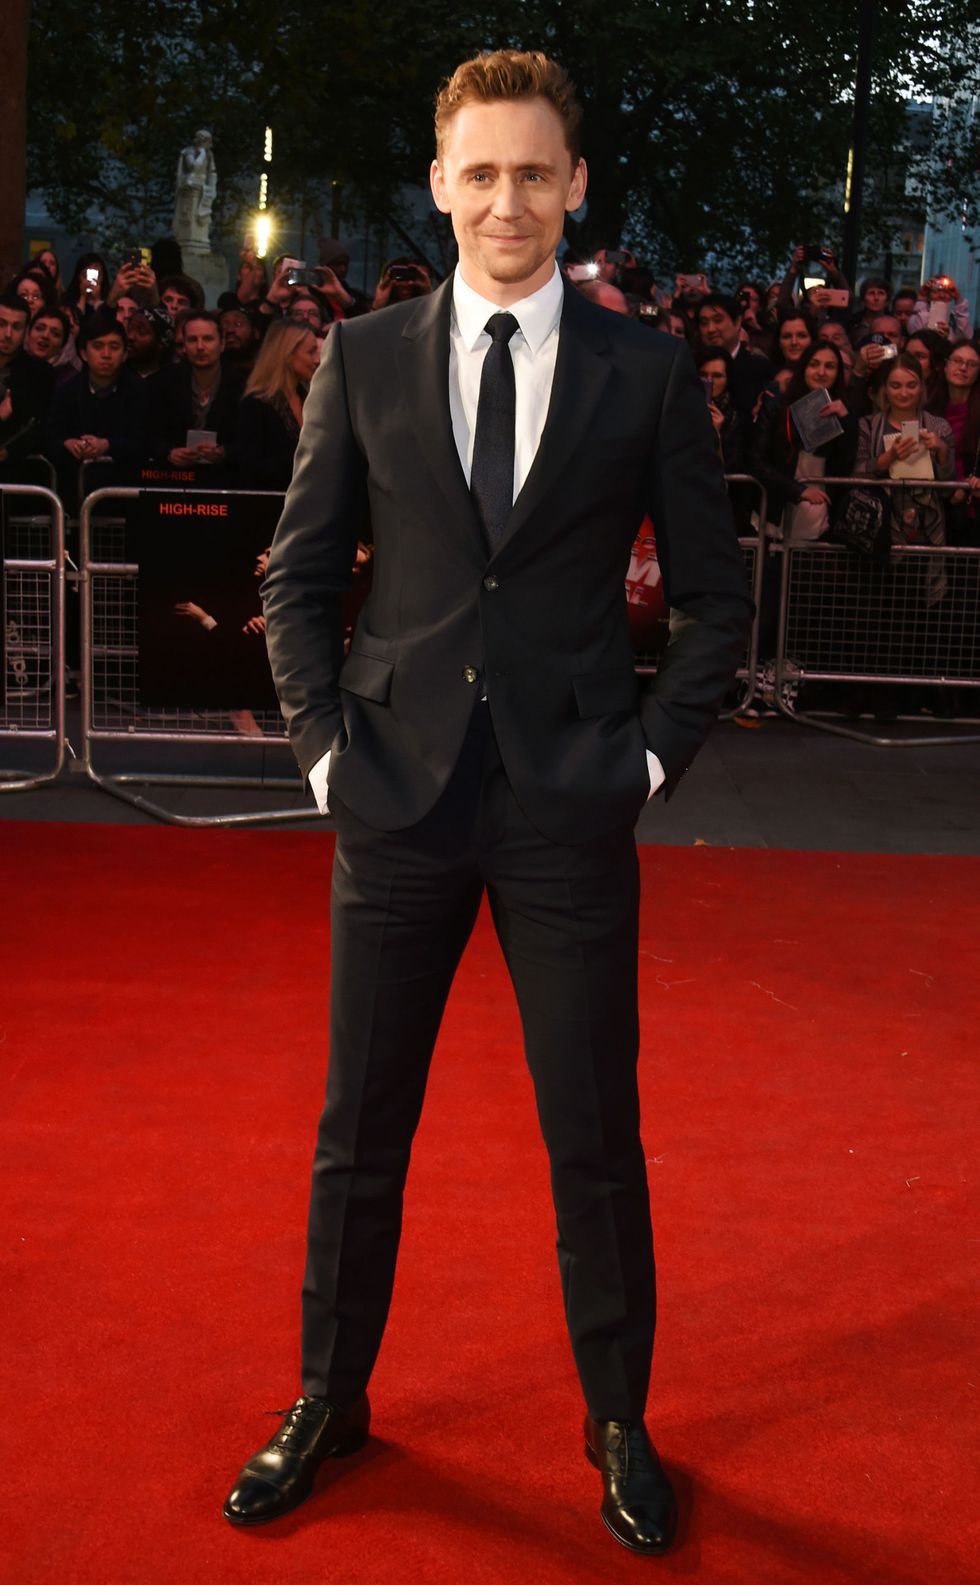 <p>絕不出錯的黑白西裝搭配！合身剪裁讓造型簡潔俐落，毫不掩蓋Tom Hiddleston本身的巨星丰采。</p>